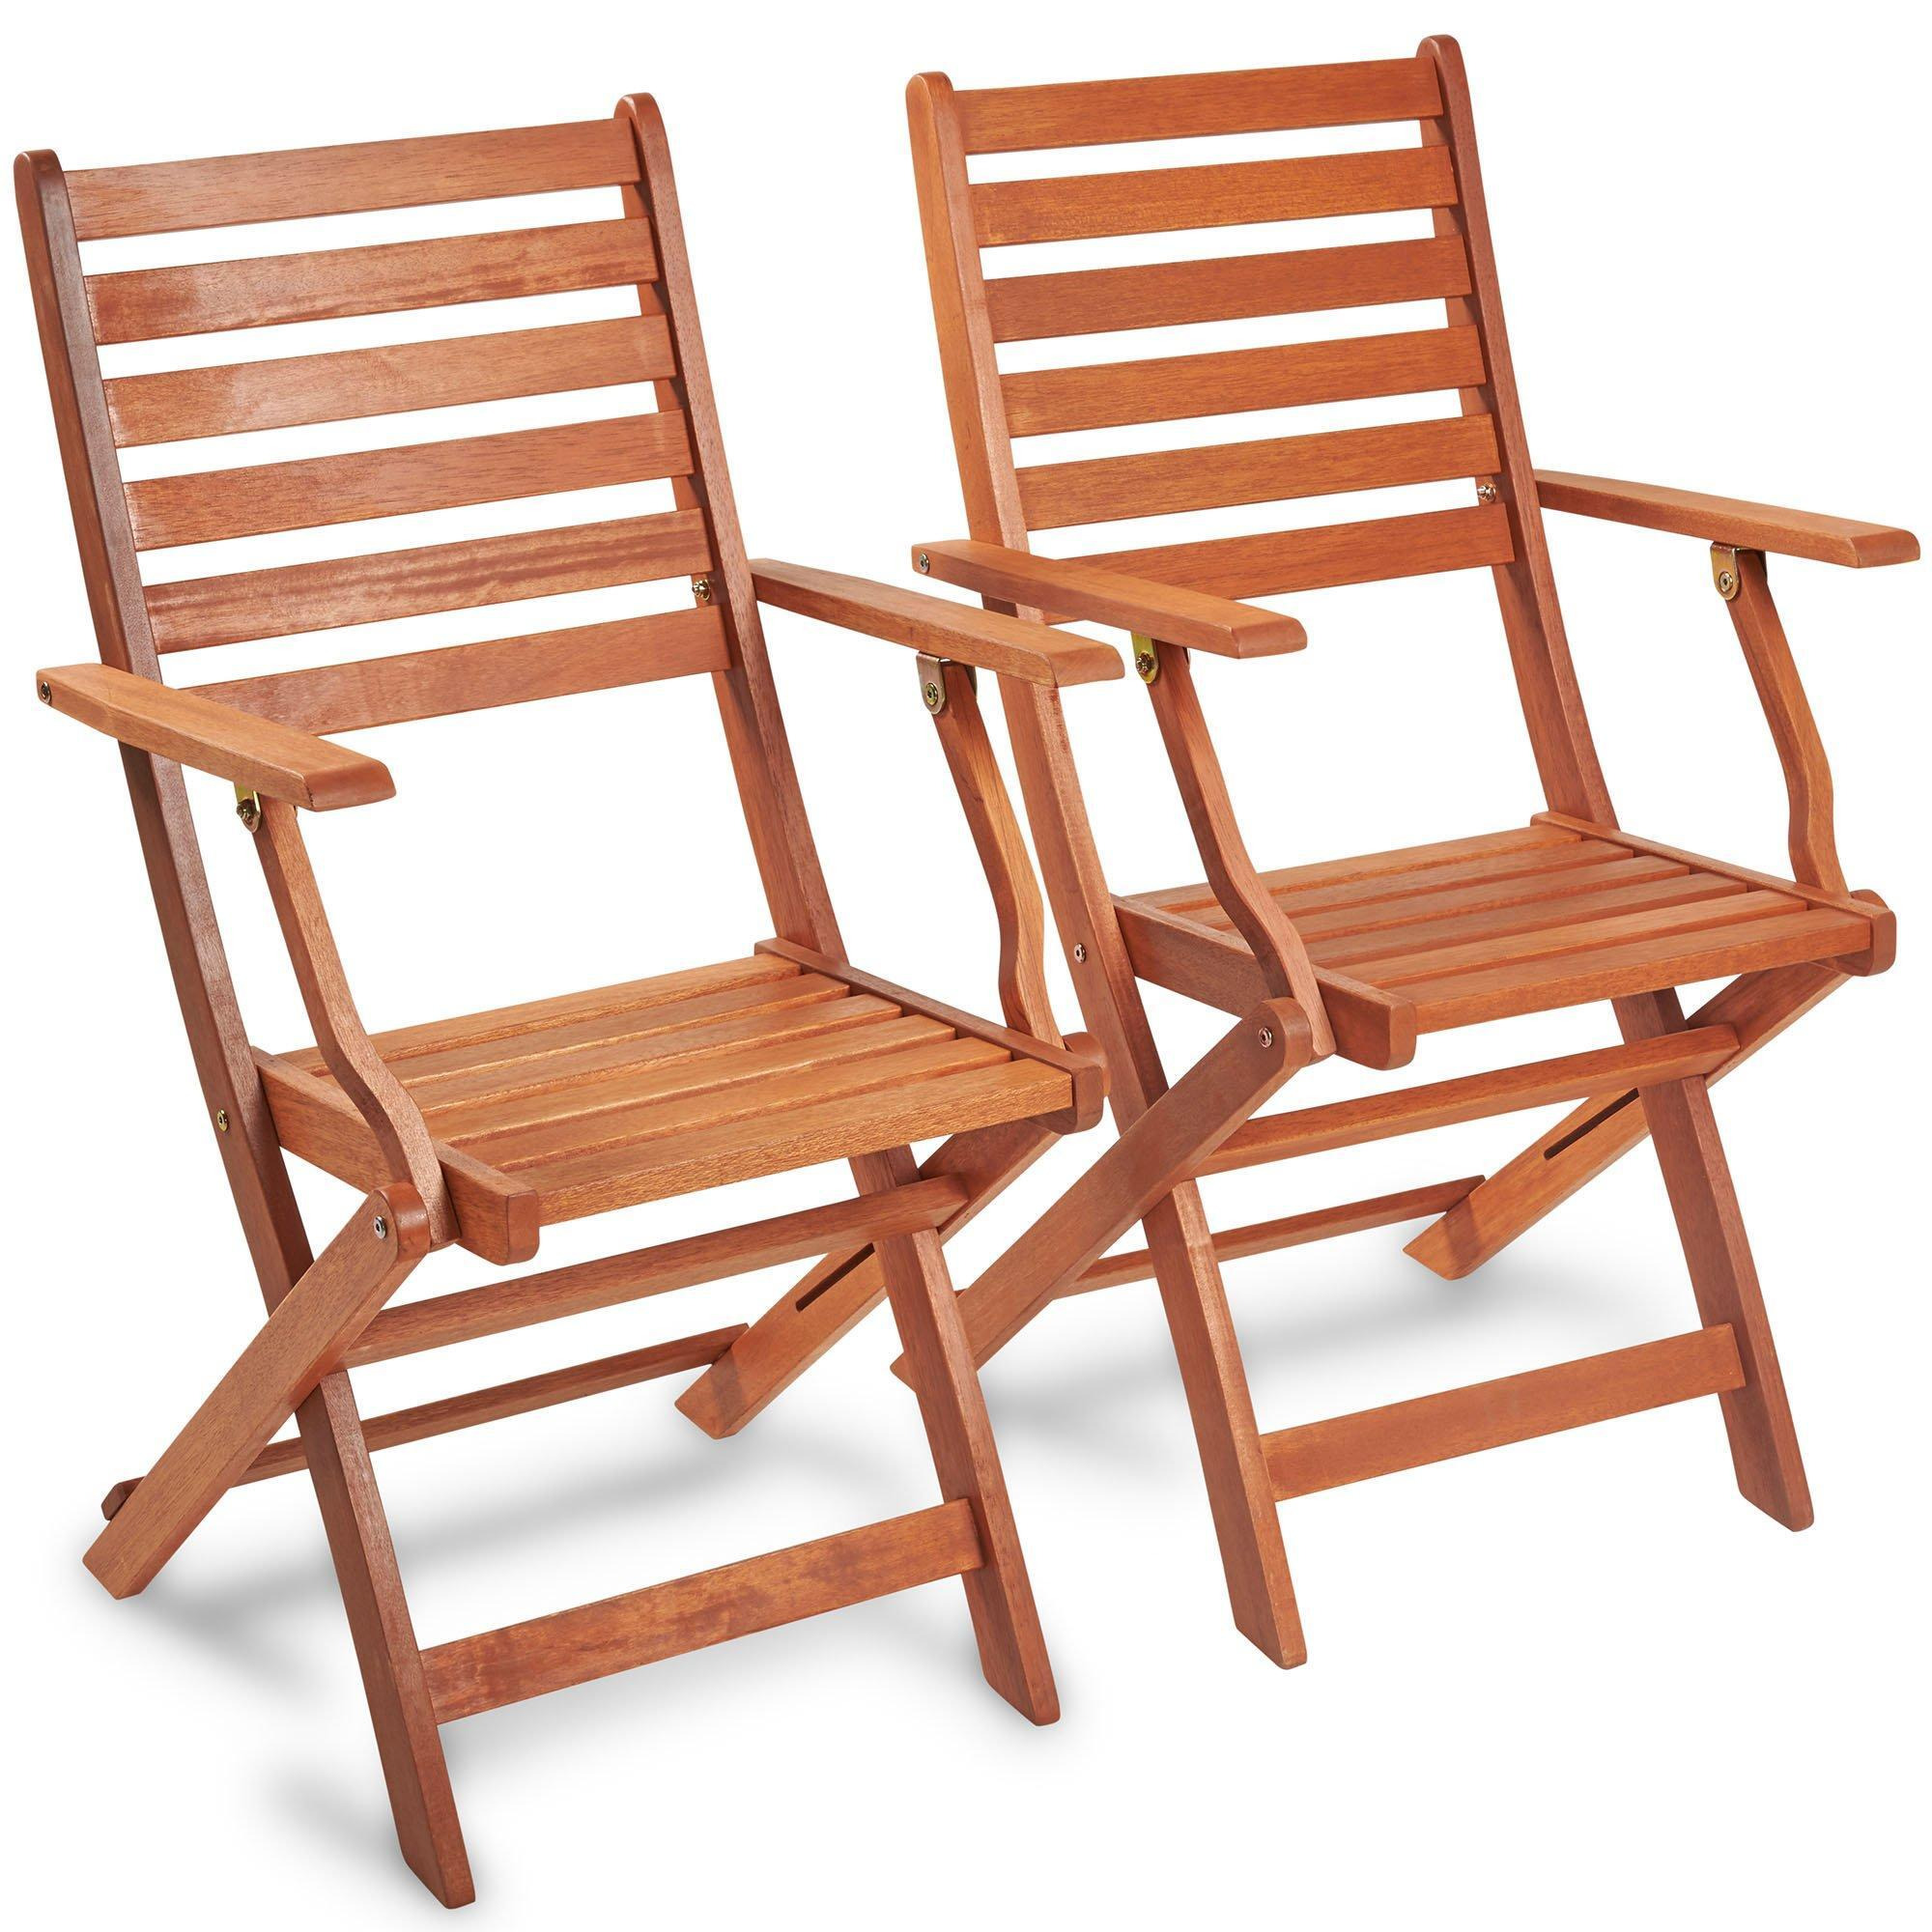 Set of 2 Meranti Hardwood Folding  Garden Chairs - image 1